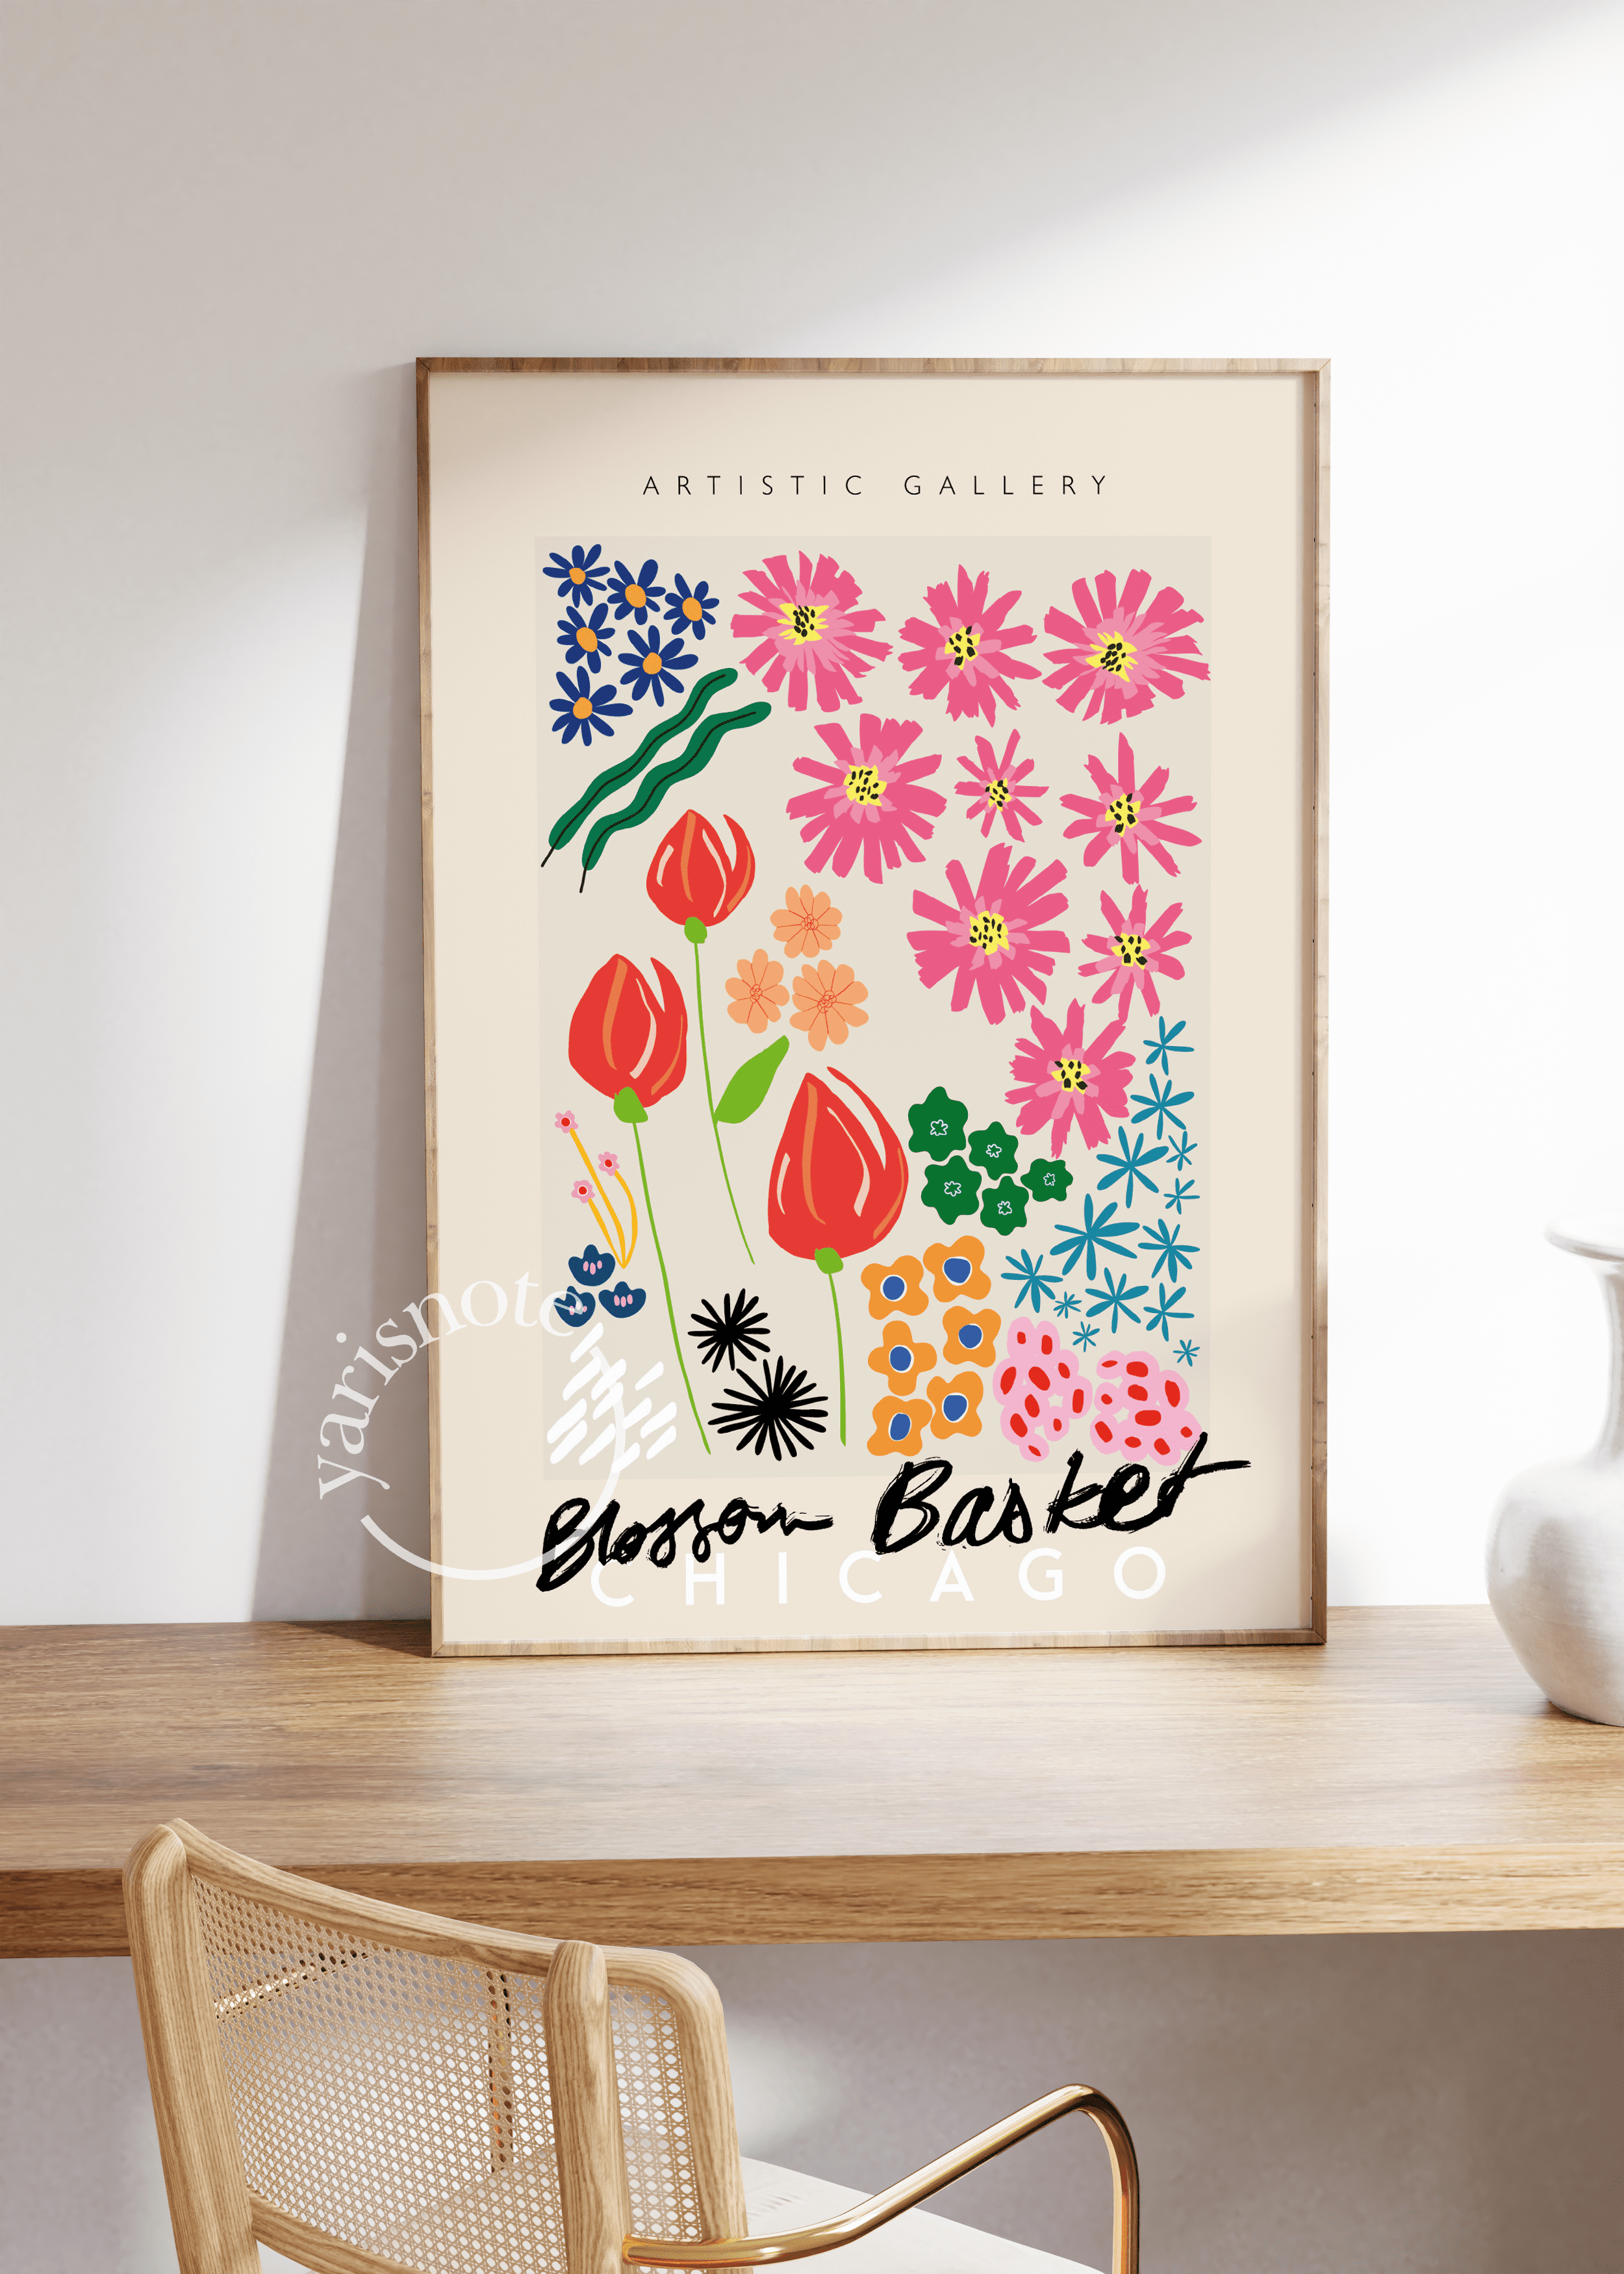 Blossom Basket Chicago Unframed Poster